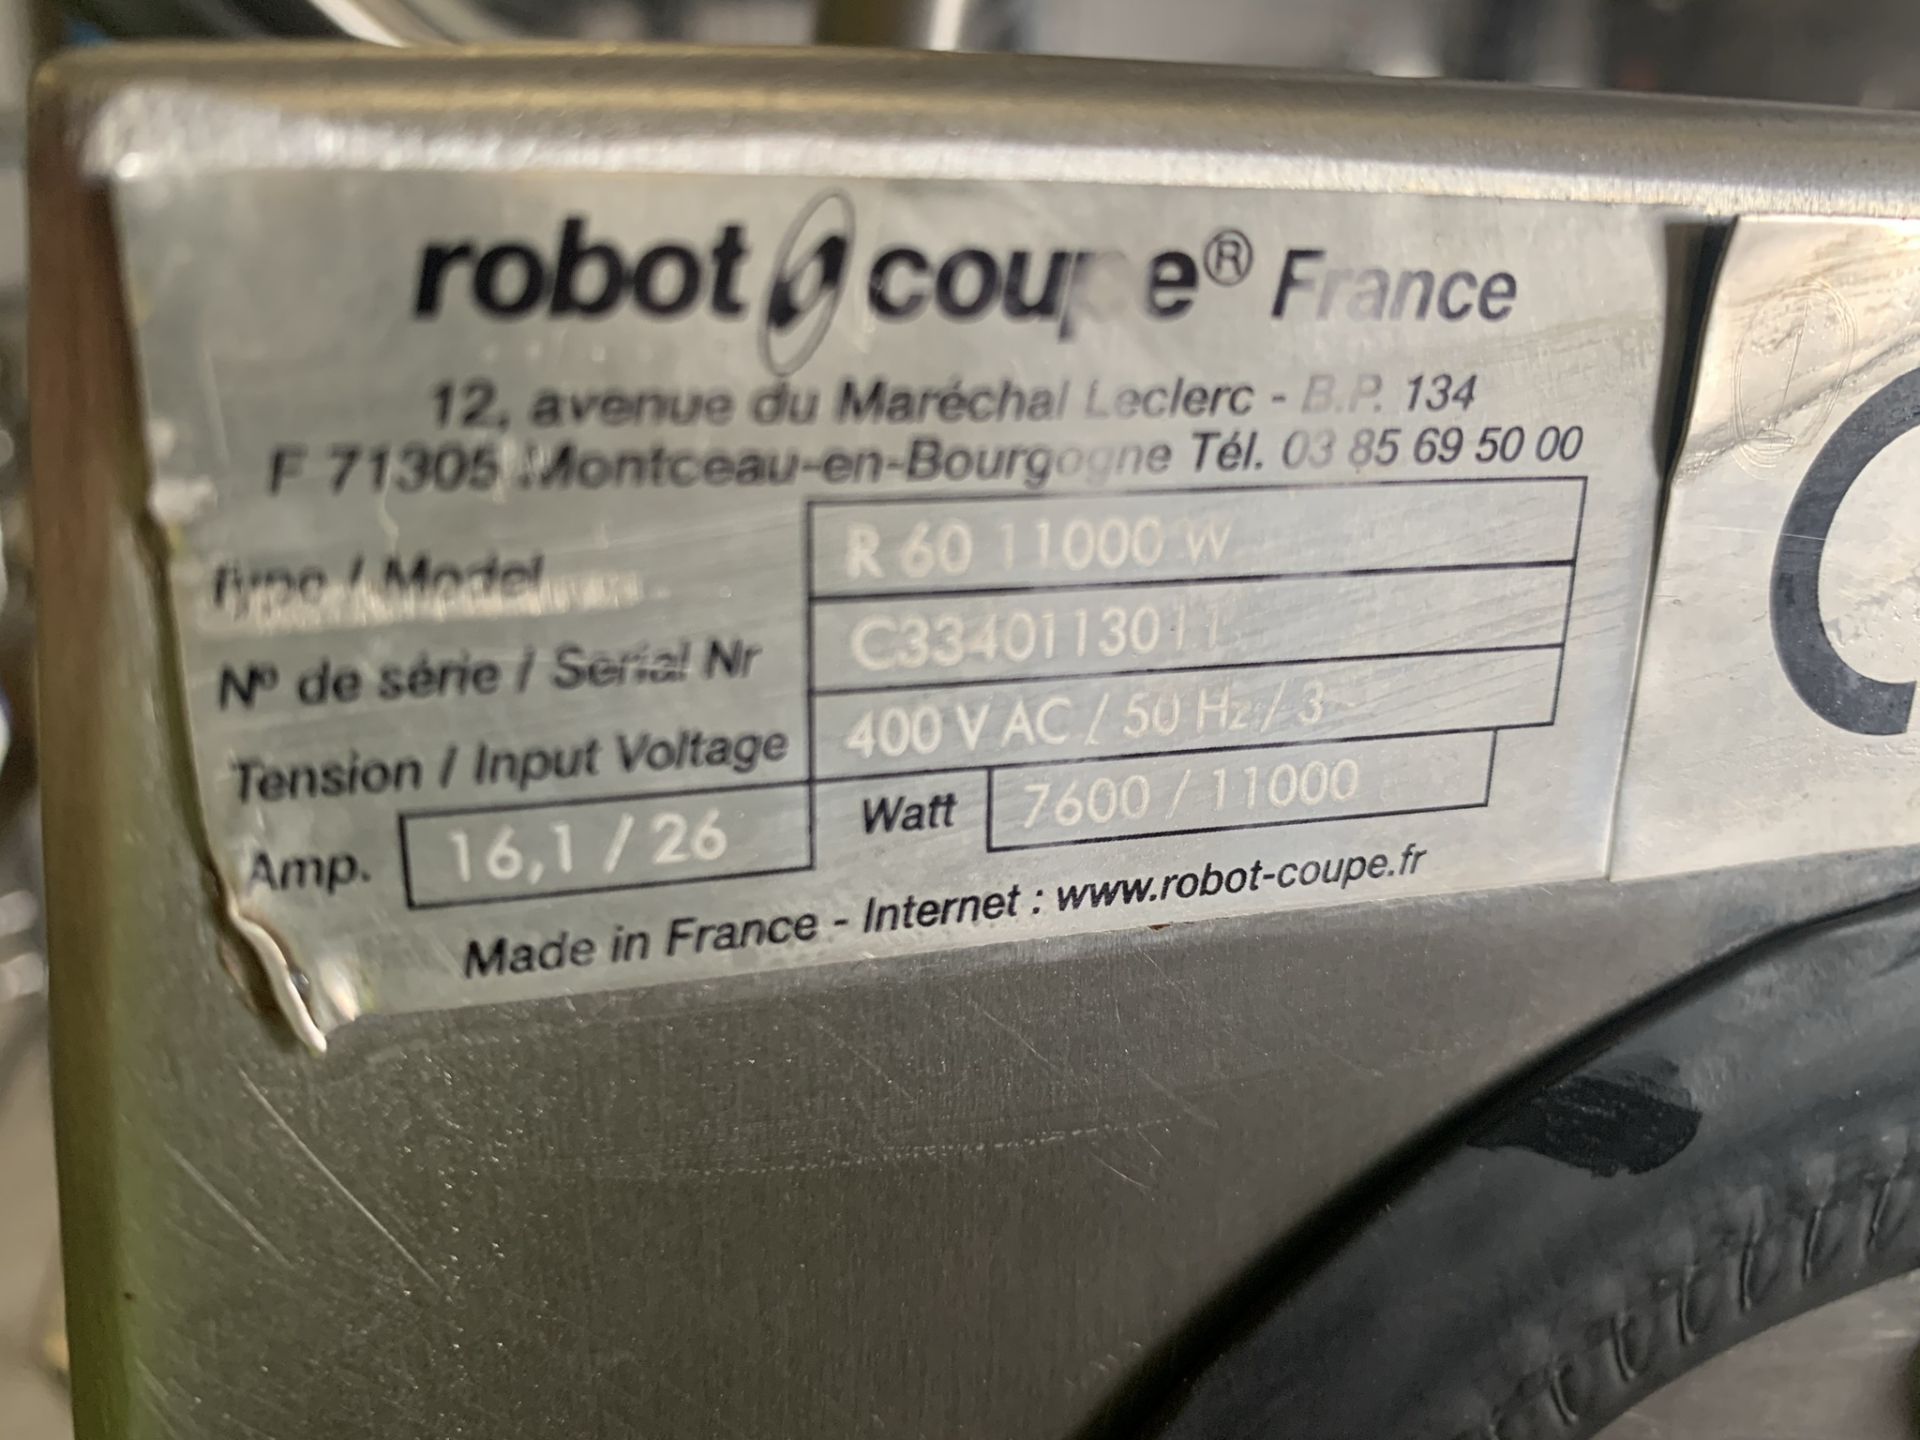 Robot R6011000W Robot, approx. 0.8m x 0.6m x 1.4m - Image 4 of 4